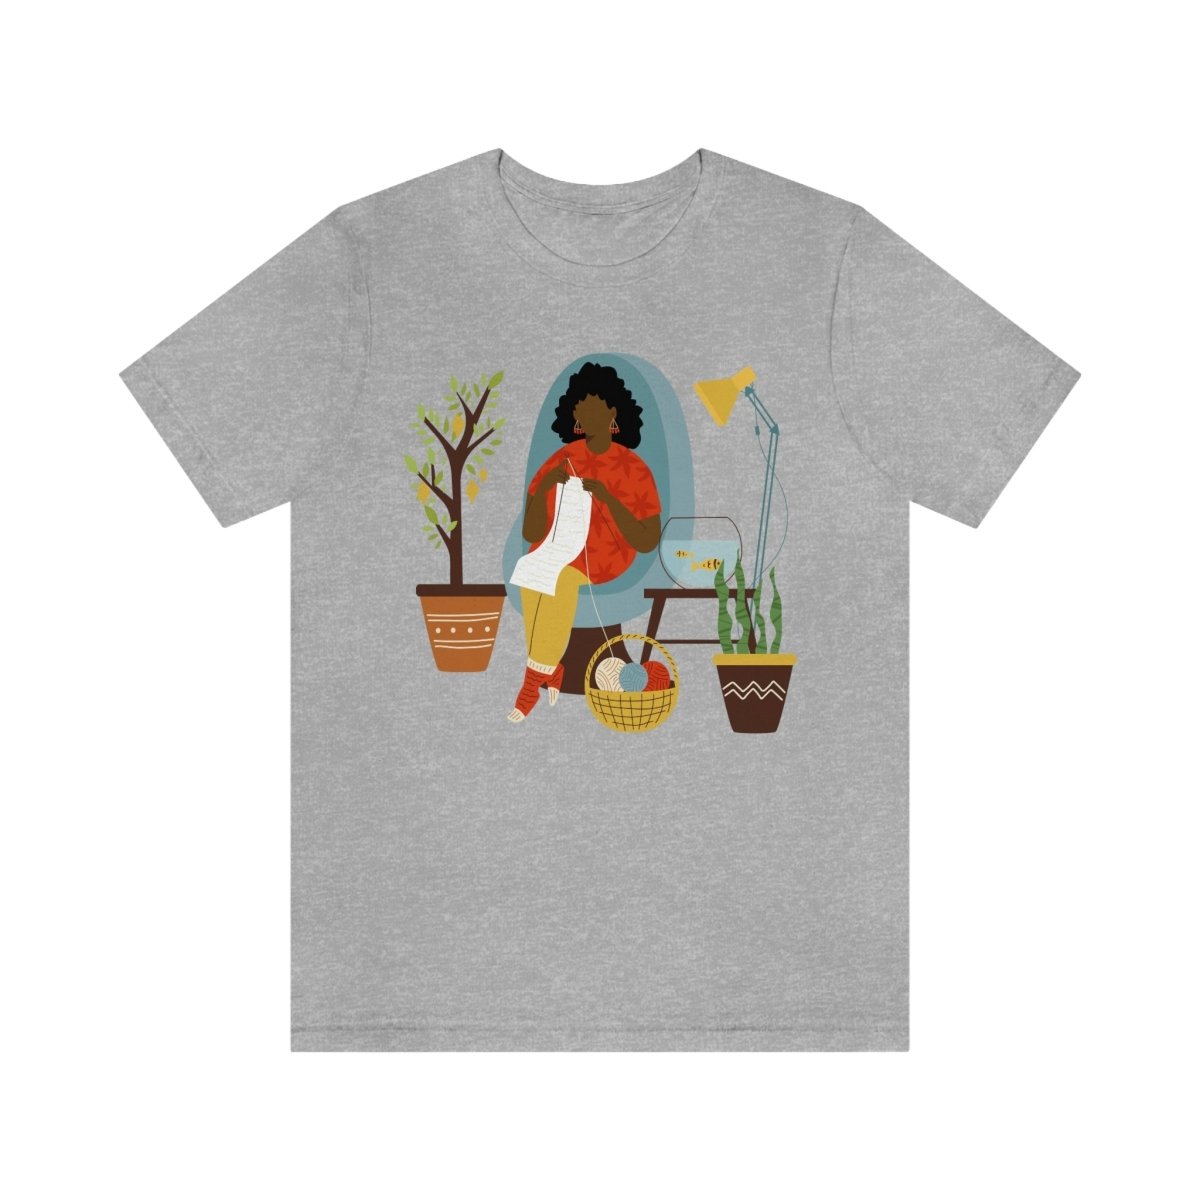 Knitting Woman Unisex Shirt - The Trini Gee